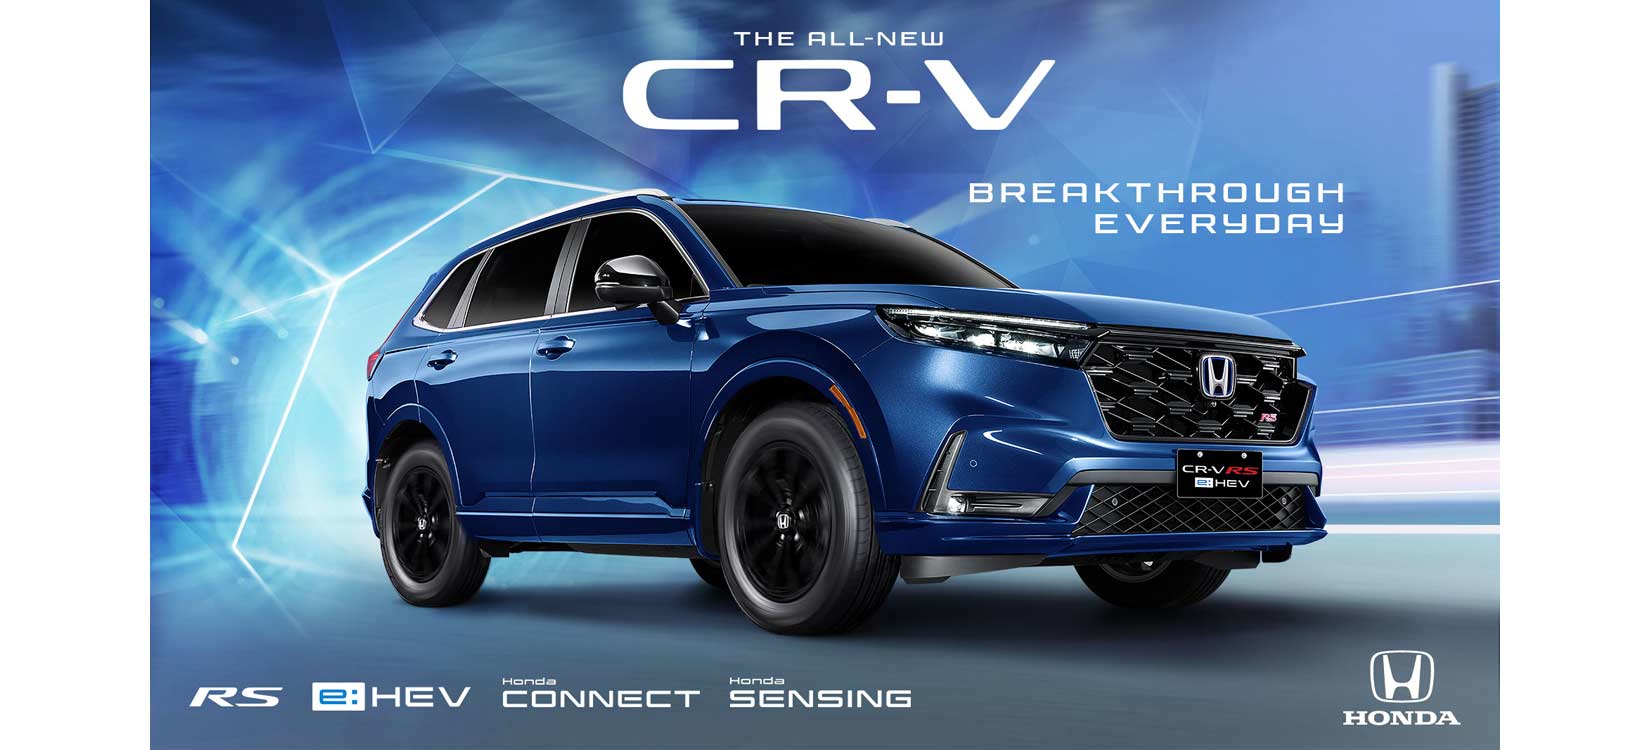 Innovation Redefined: The All-New Honda CR-V showcases masterful engineering with e:HEV Full Hybrid, Honda CONNECT and Honda SENSING